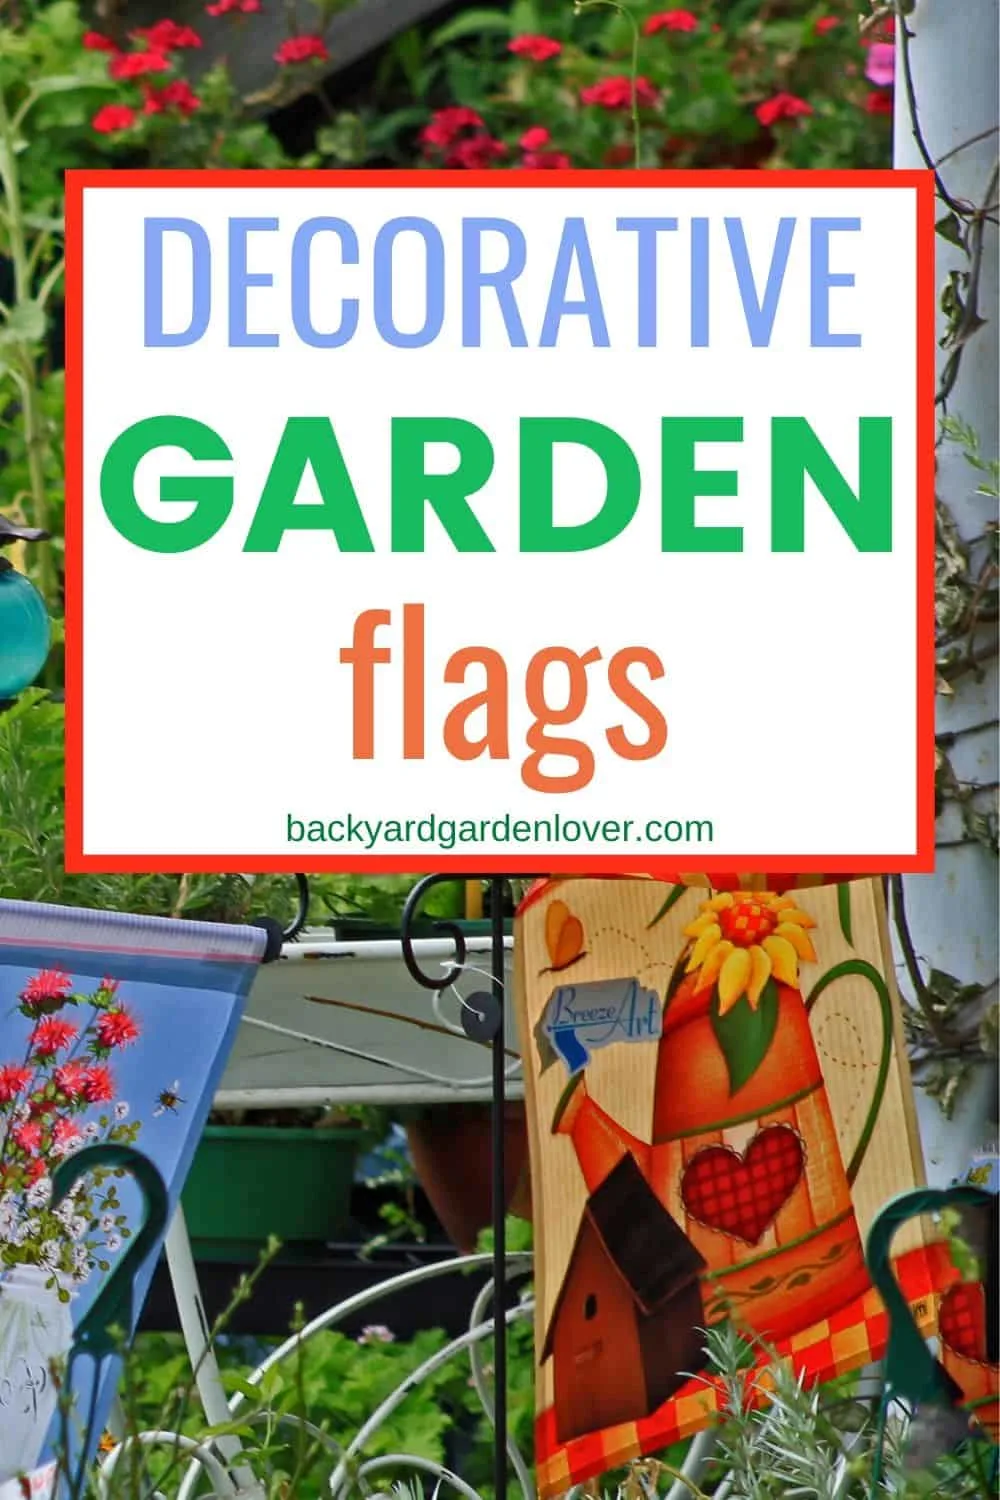 Decorative garden flags